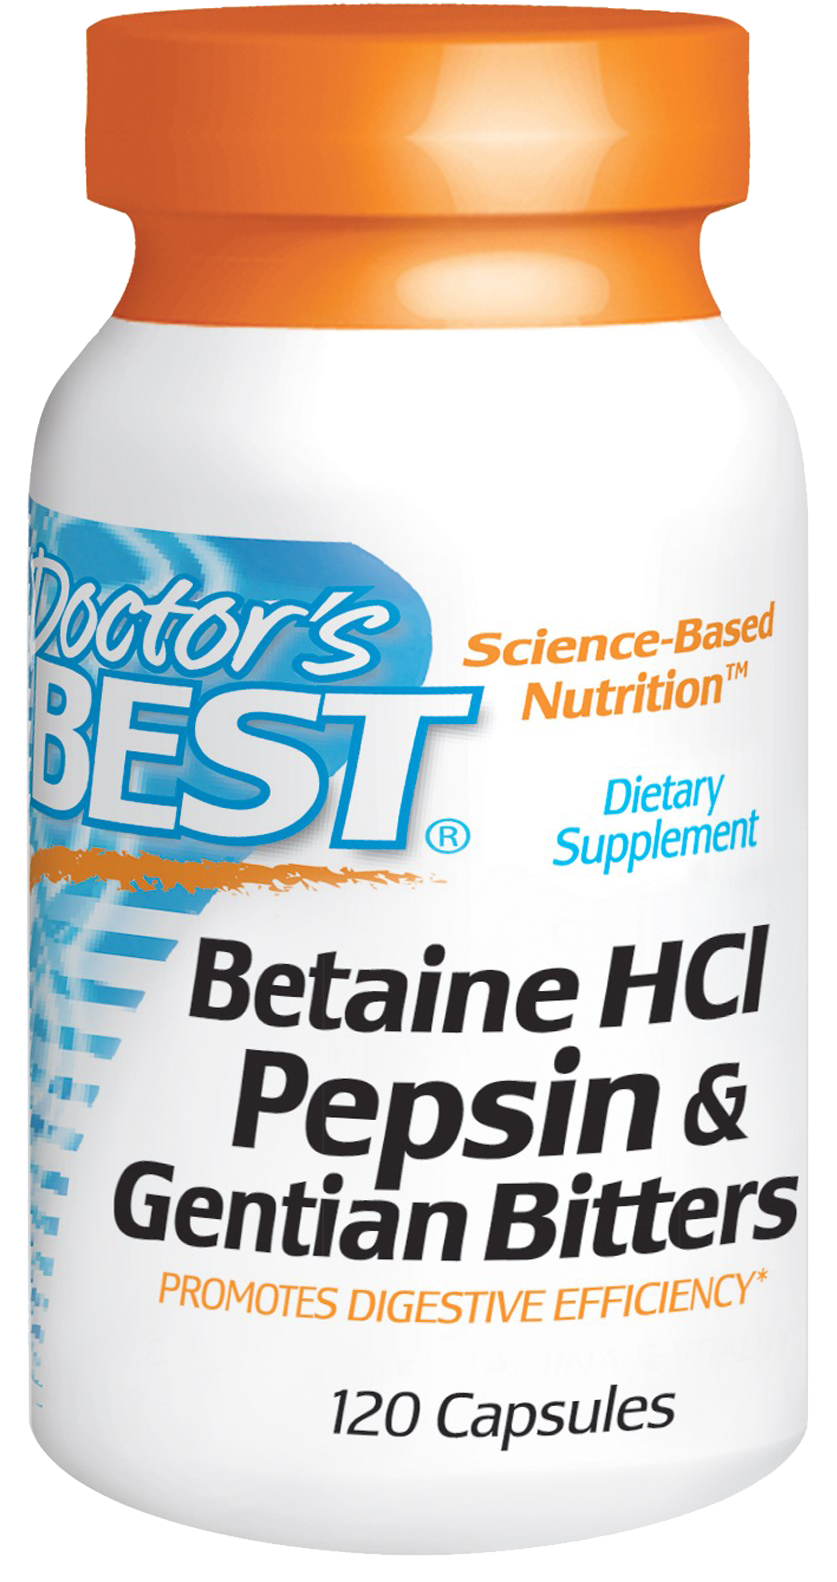 Doctor's Best - Betaine HCl Pepsin & Gentian Bitters